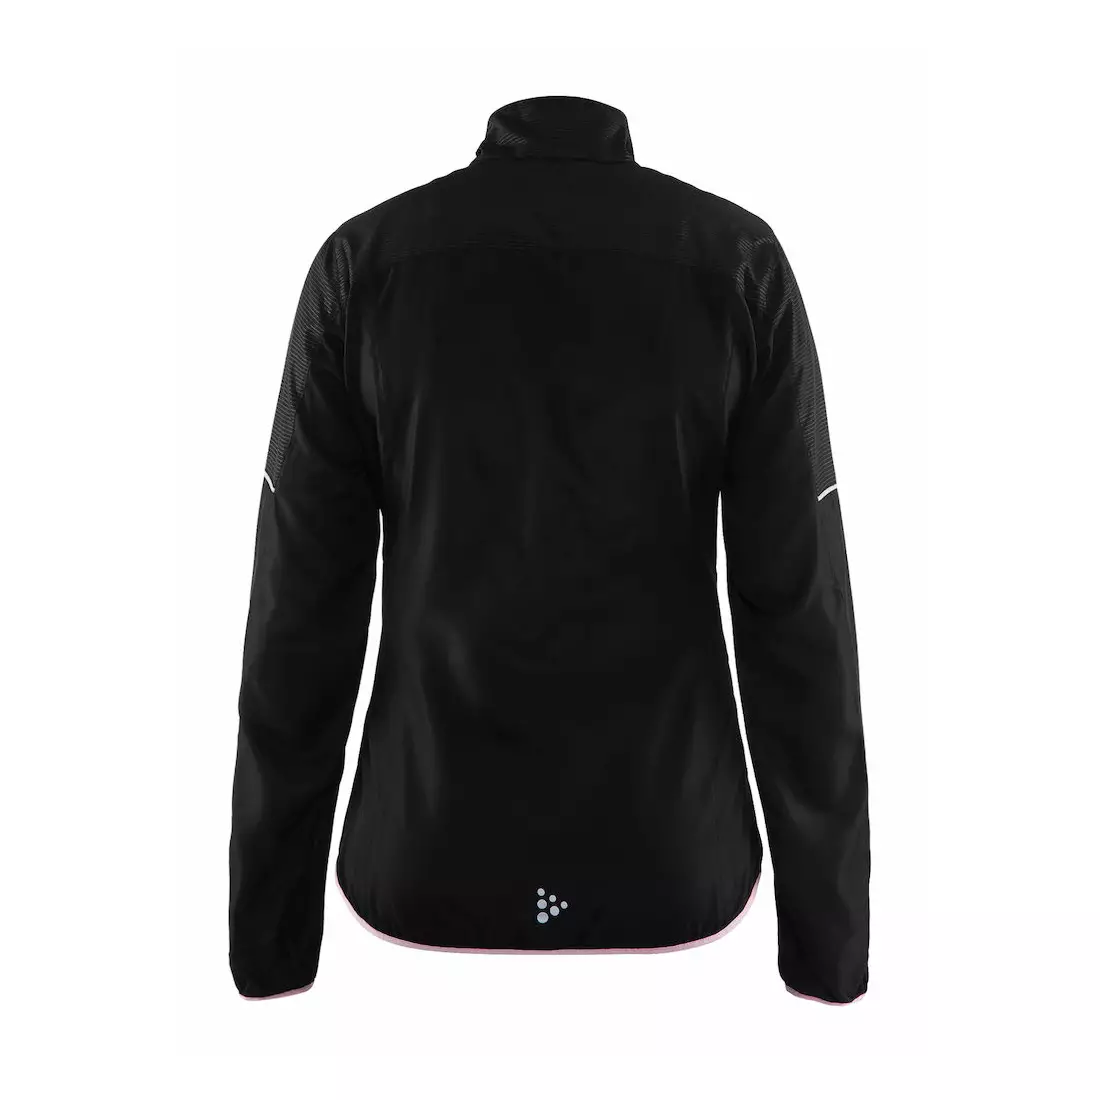 CRAFT RADIATE - women's jacket, running windbreaker 1905380-999701